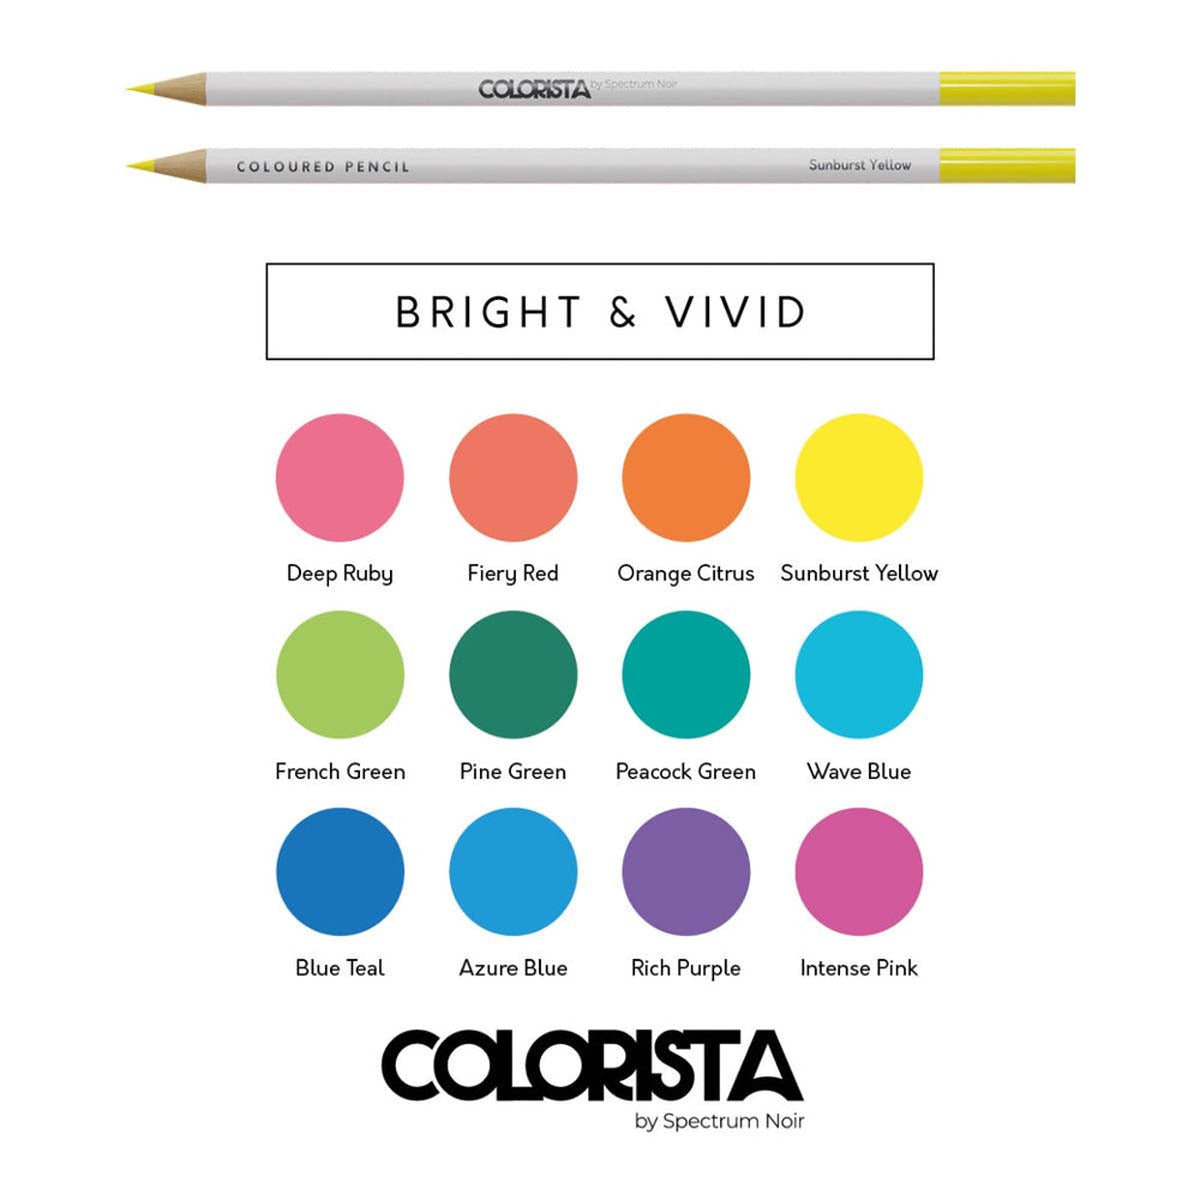 Spectrum Noir Colorista - Matite da colorare (12 set) Bright & Vivid